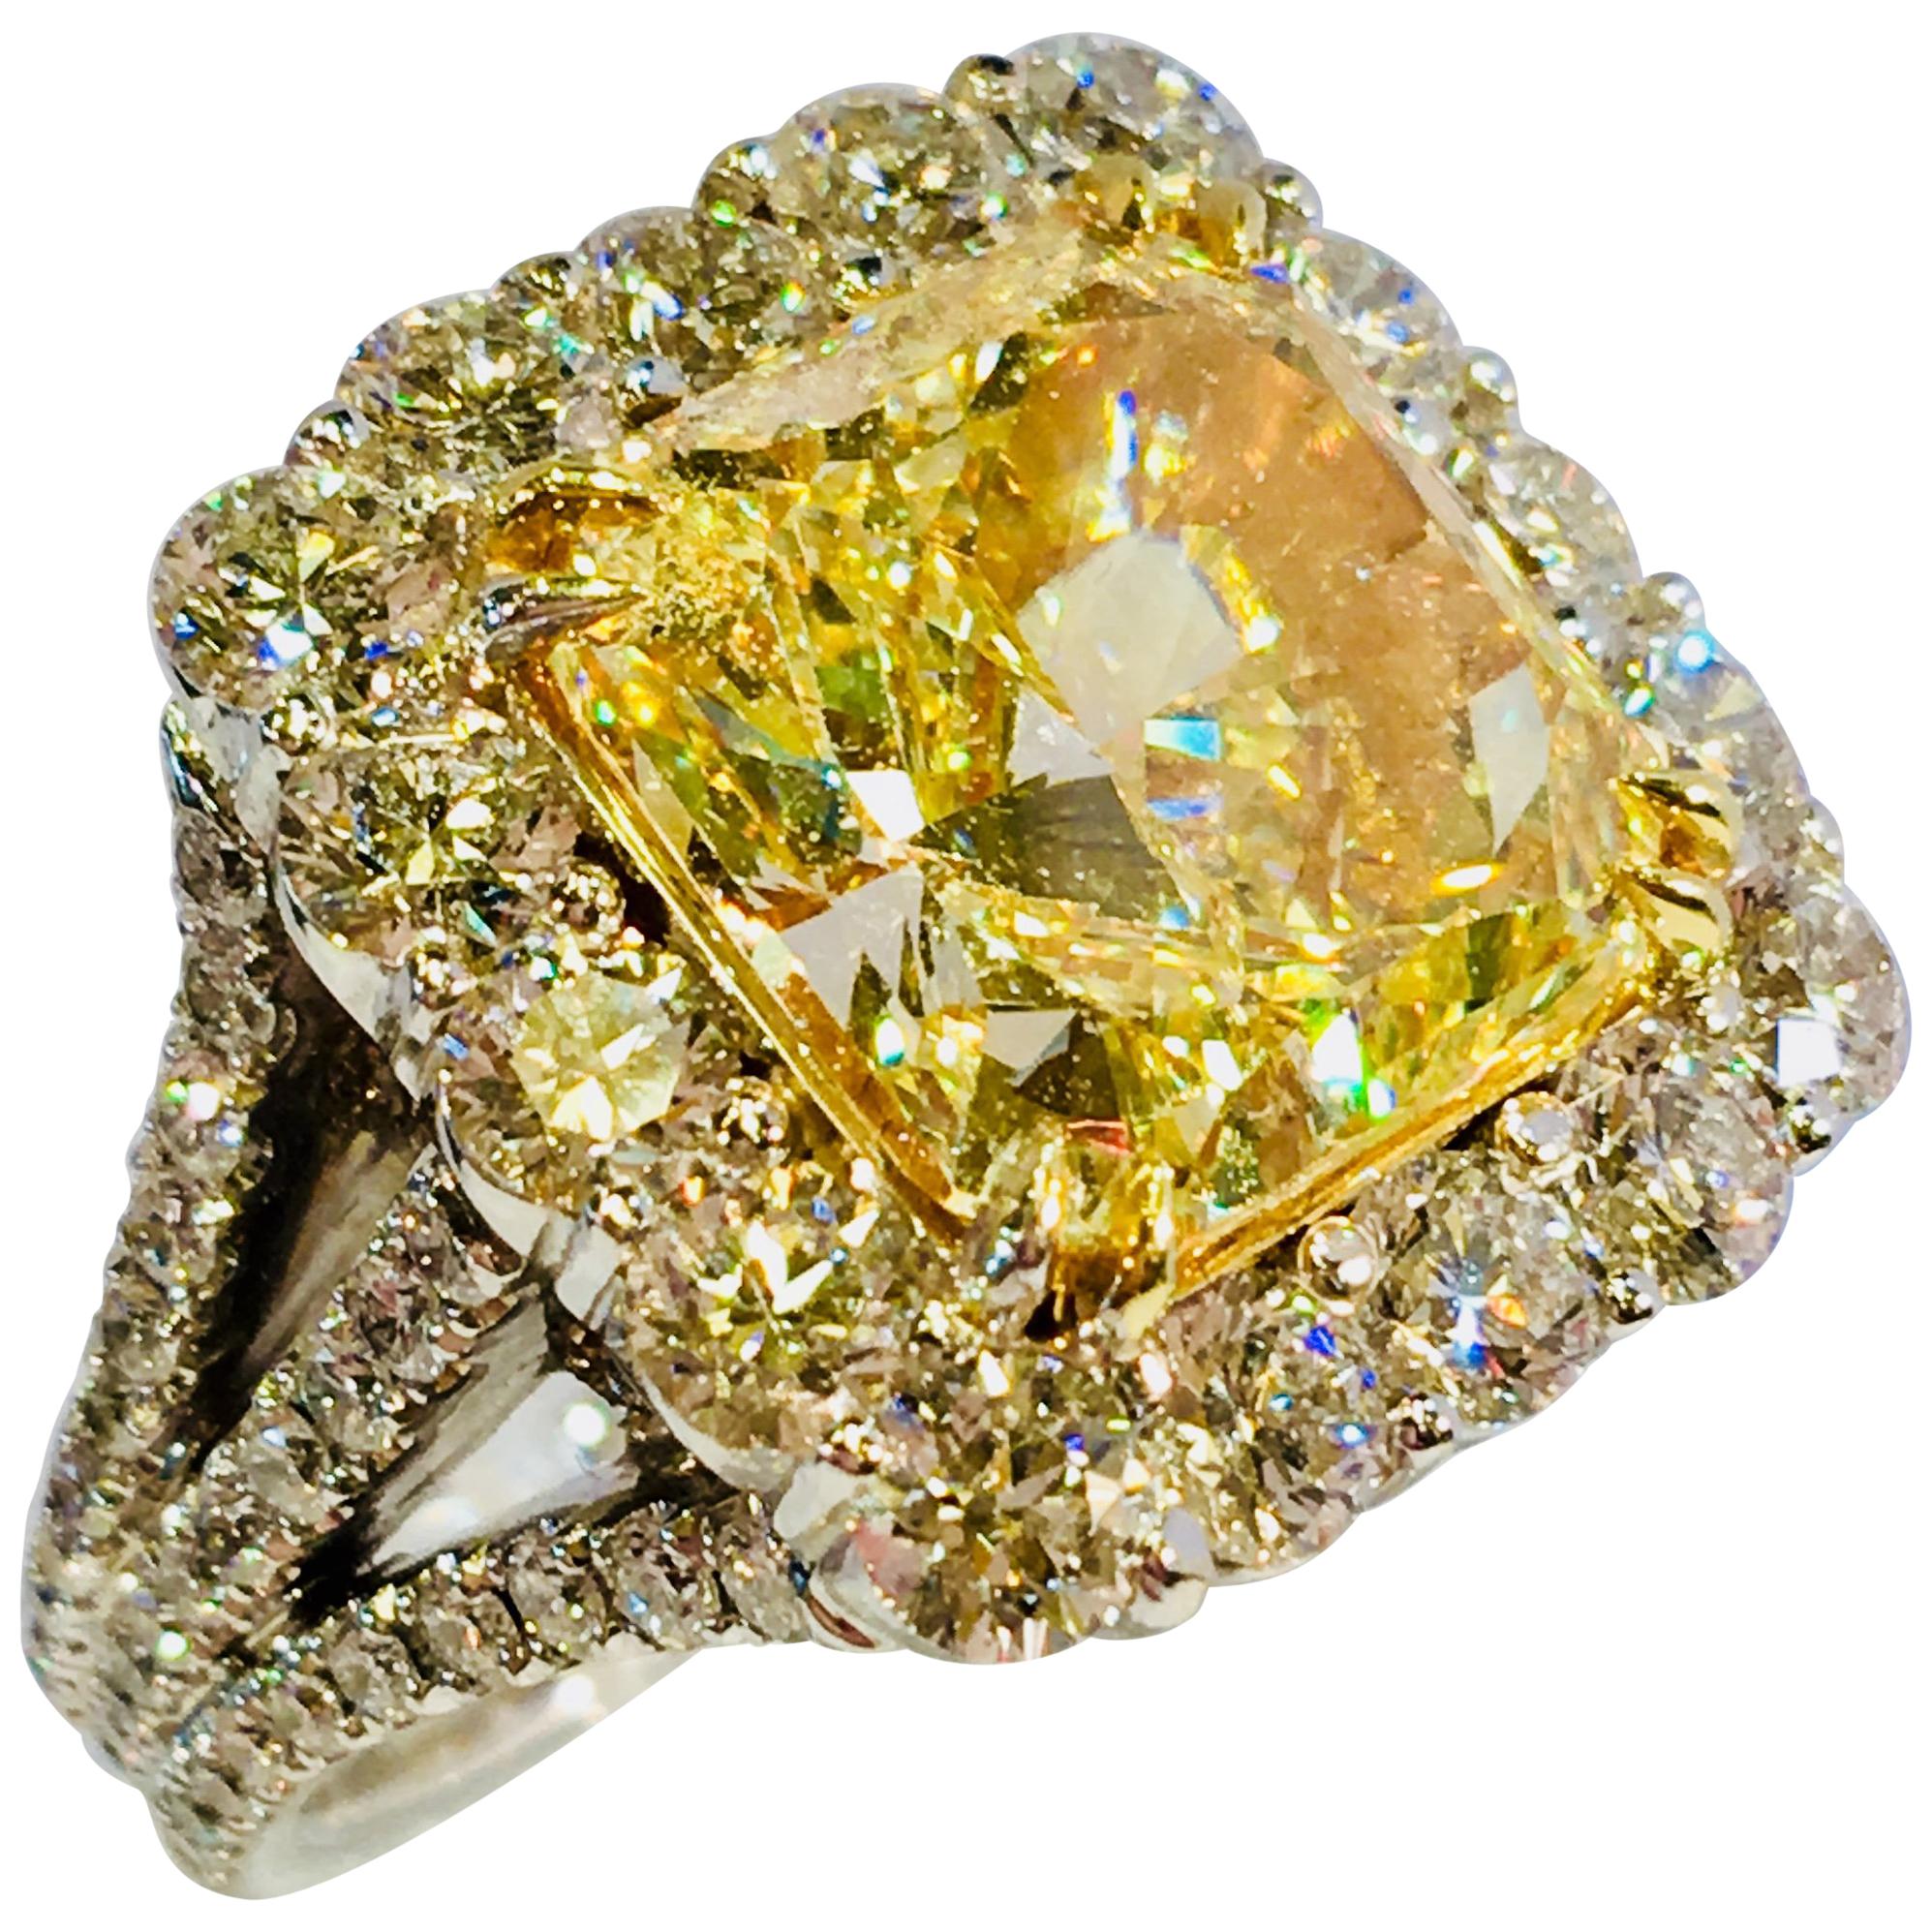 Stunning 8.48 Carat Certified Natural Fancy Yellow Square Cut Diamond Halo Ring